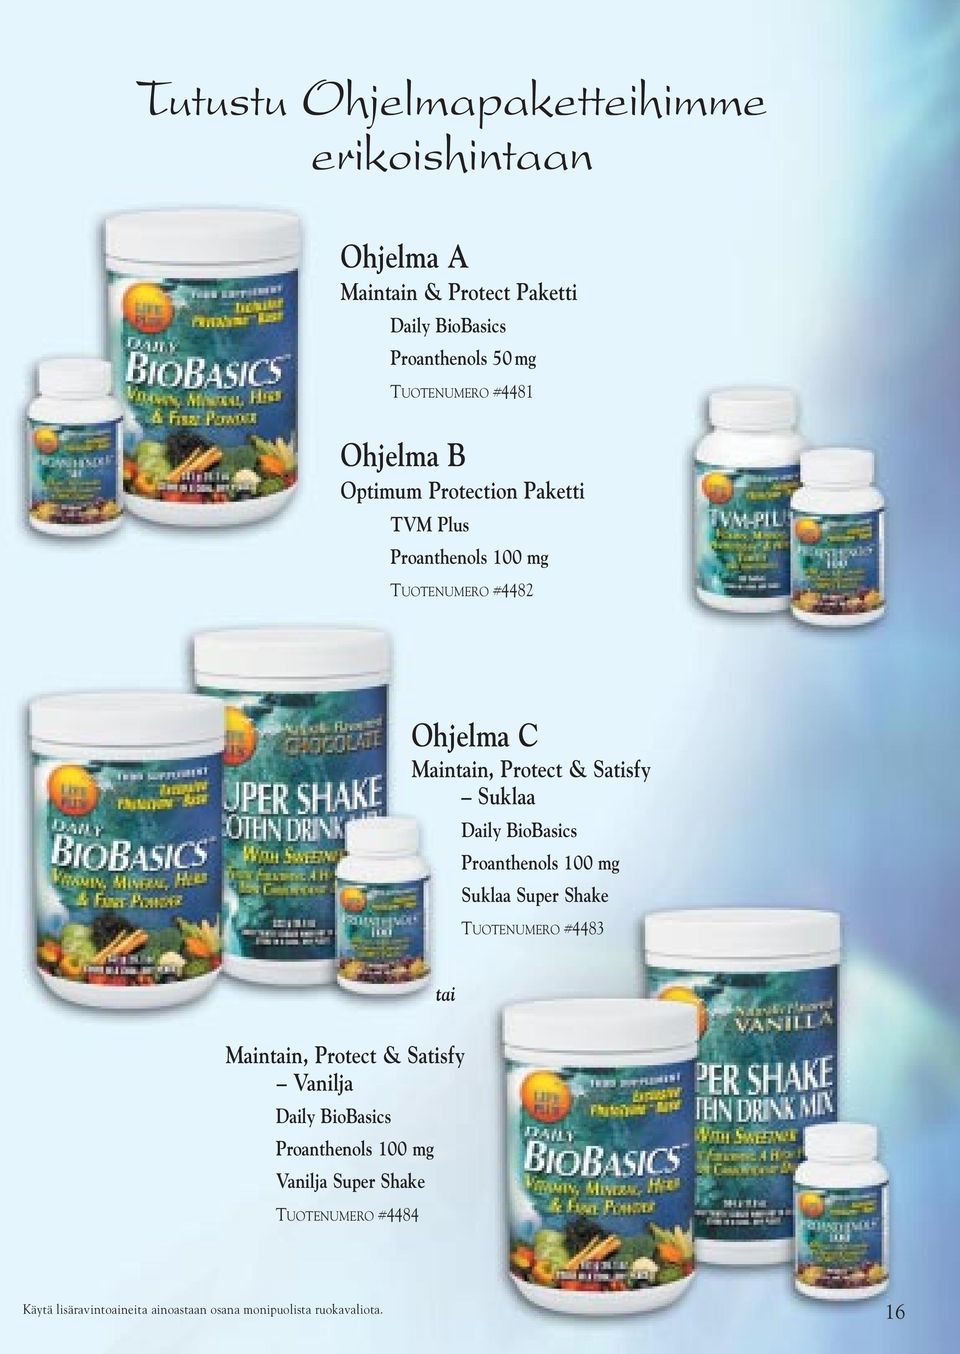 Suklaa Daily BioBasics Proanthenols 100 mg Suklaa Super Shake TUOTENUMERO #4483 tai Maintain, Protect & Satisfy Vanilja Daily